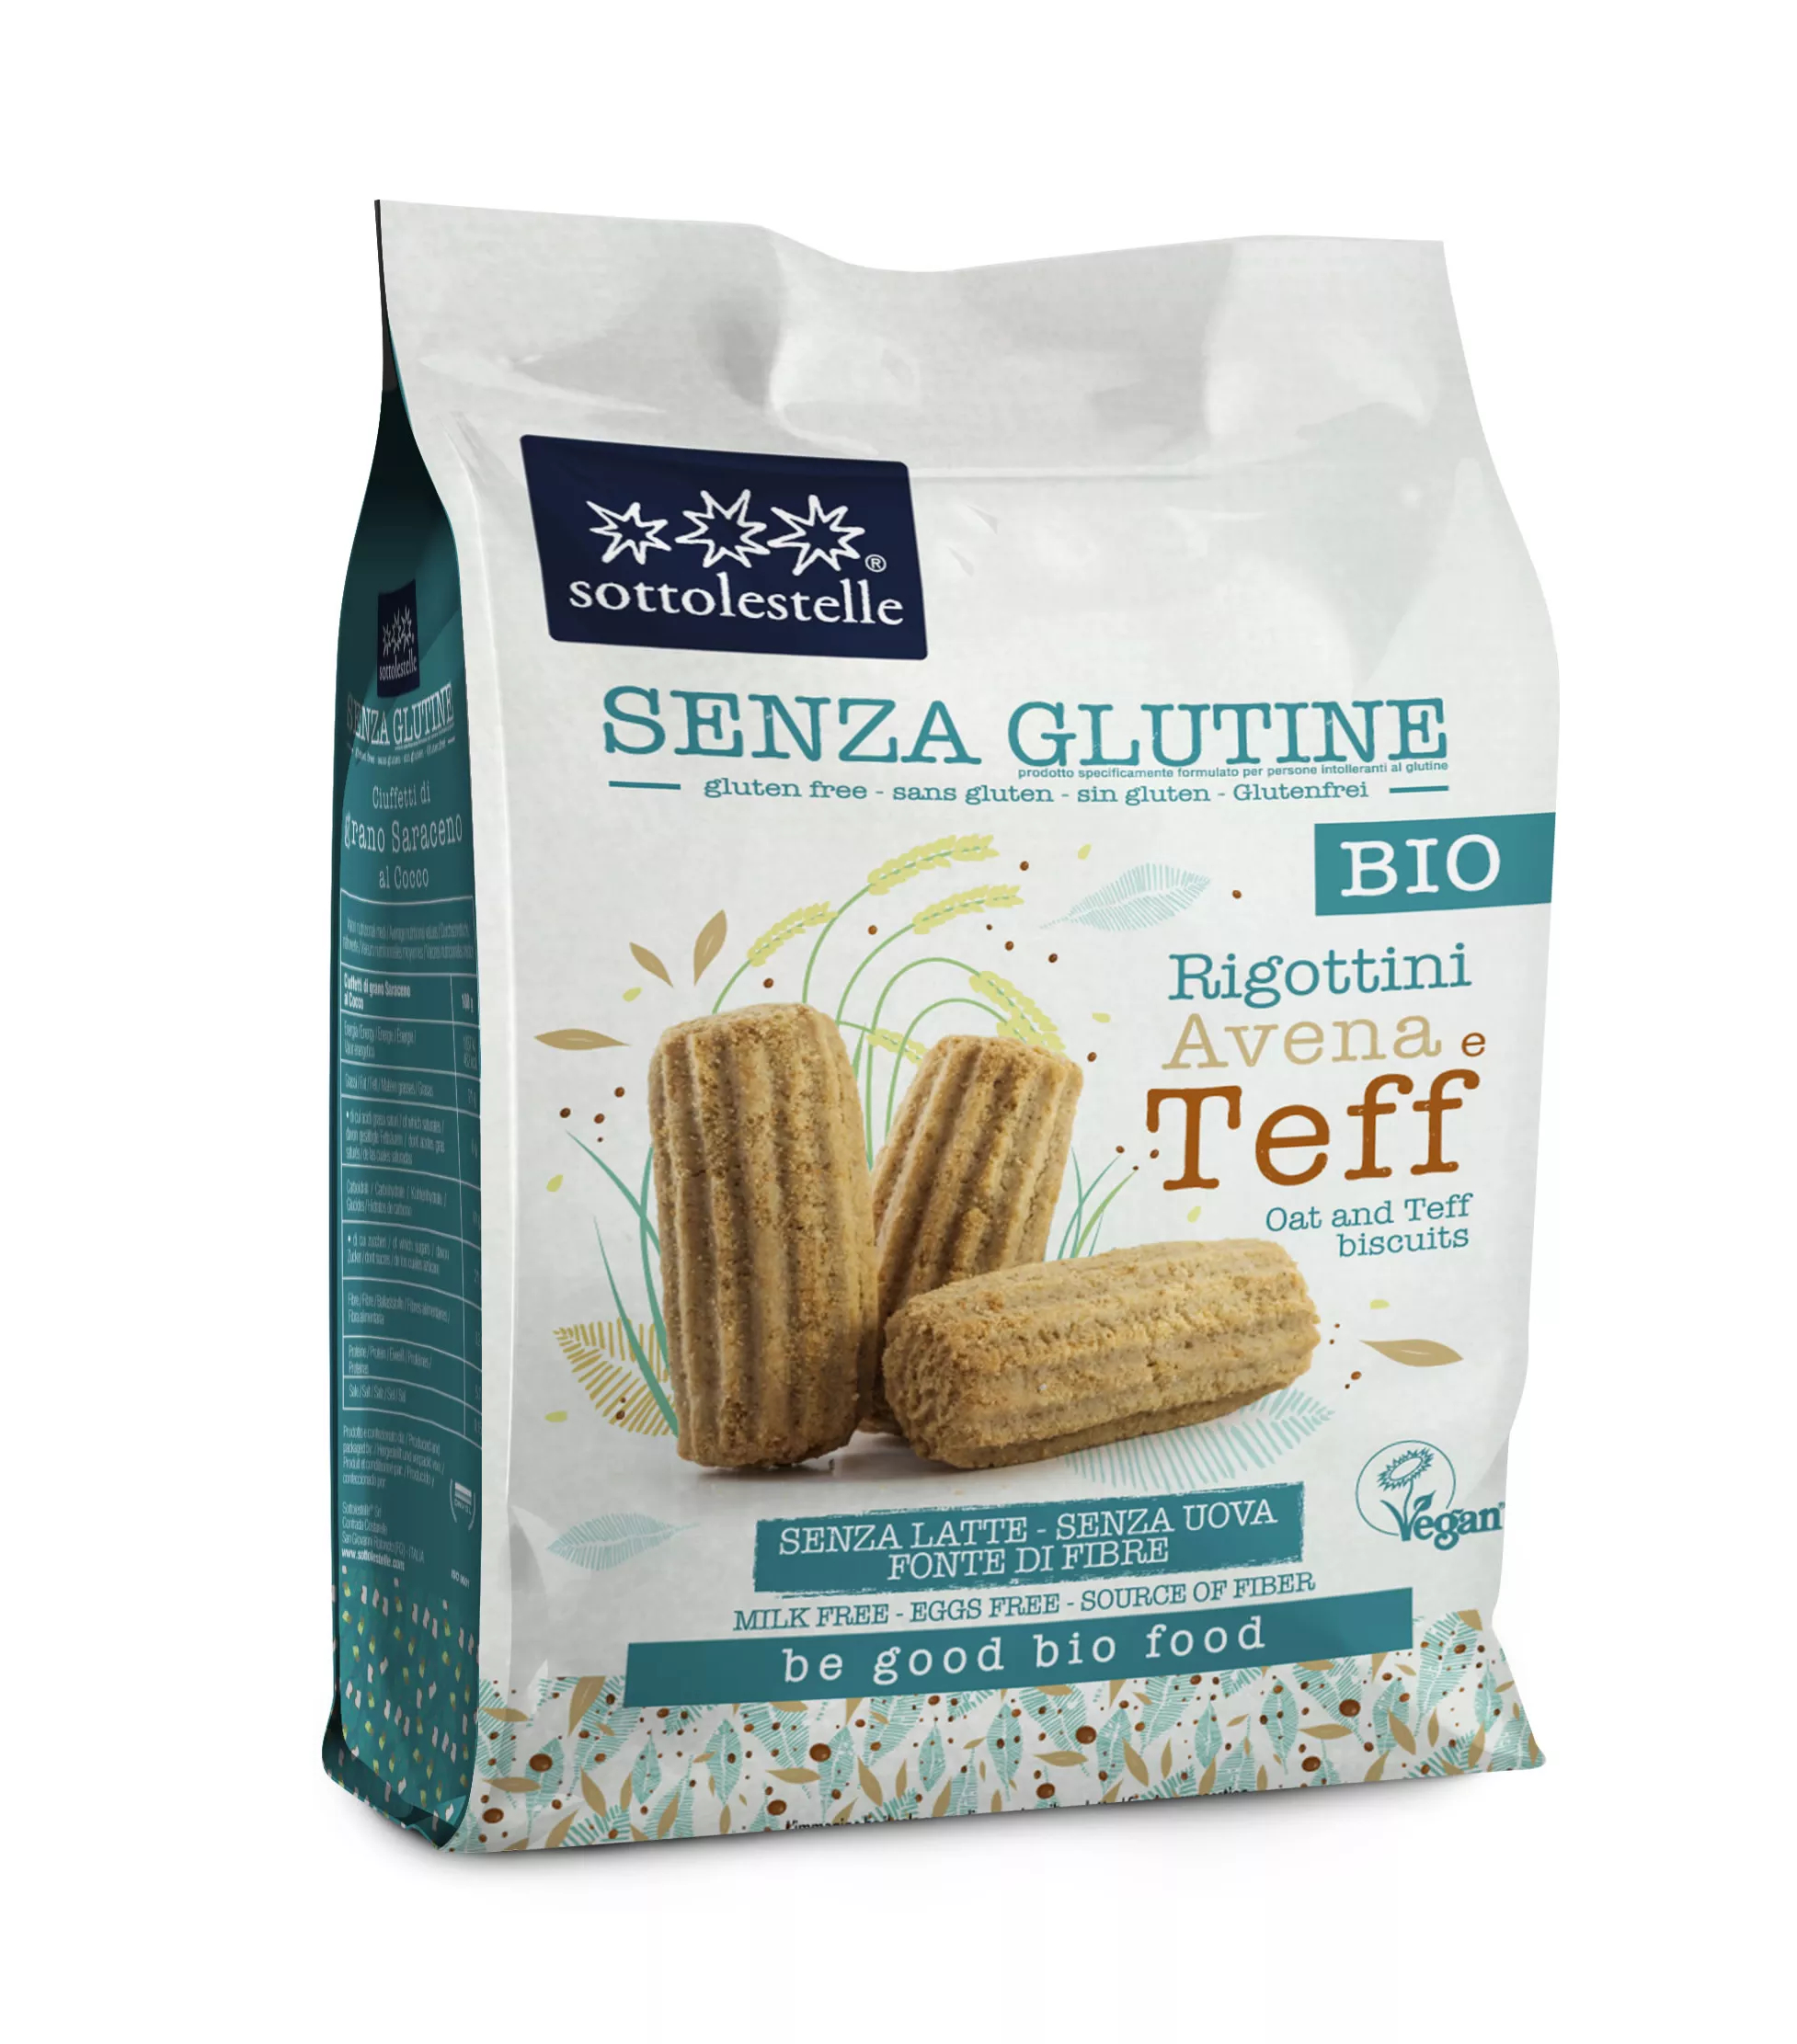 Rigottini Avena e Teff - Biscotti Senza Glutine - Sottolestelle